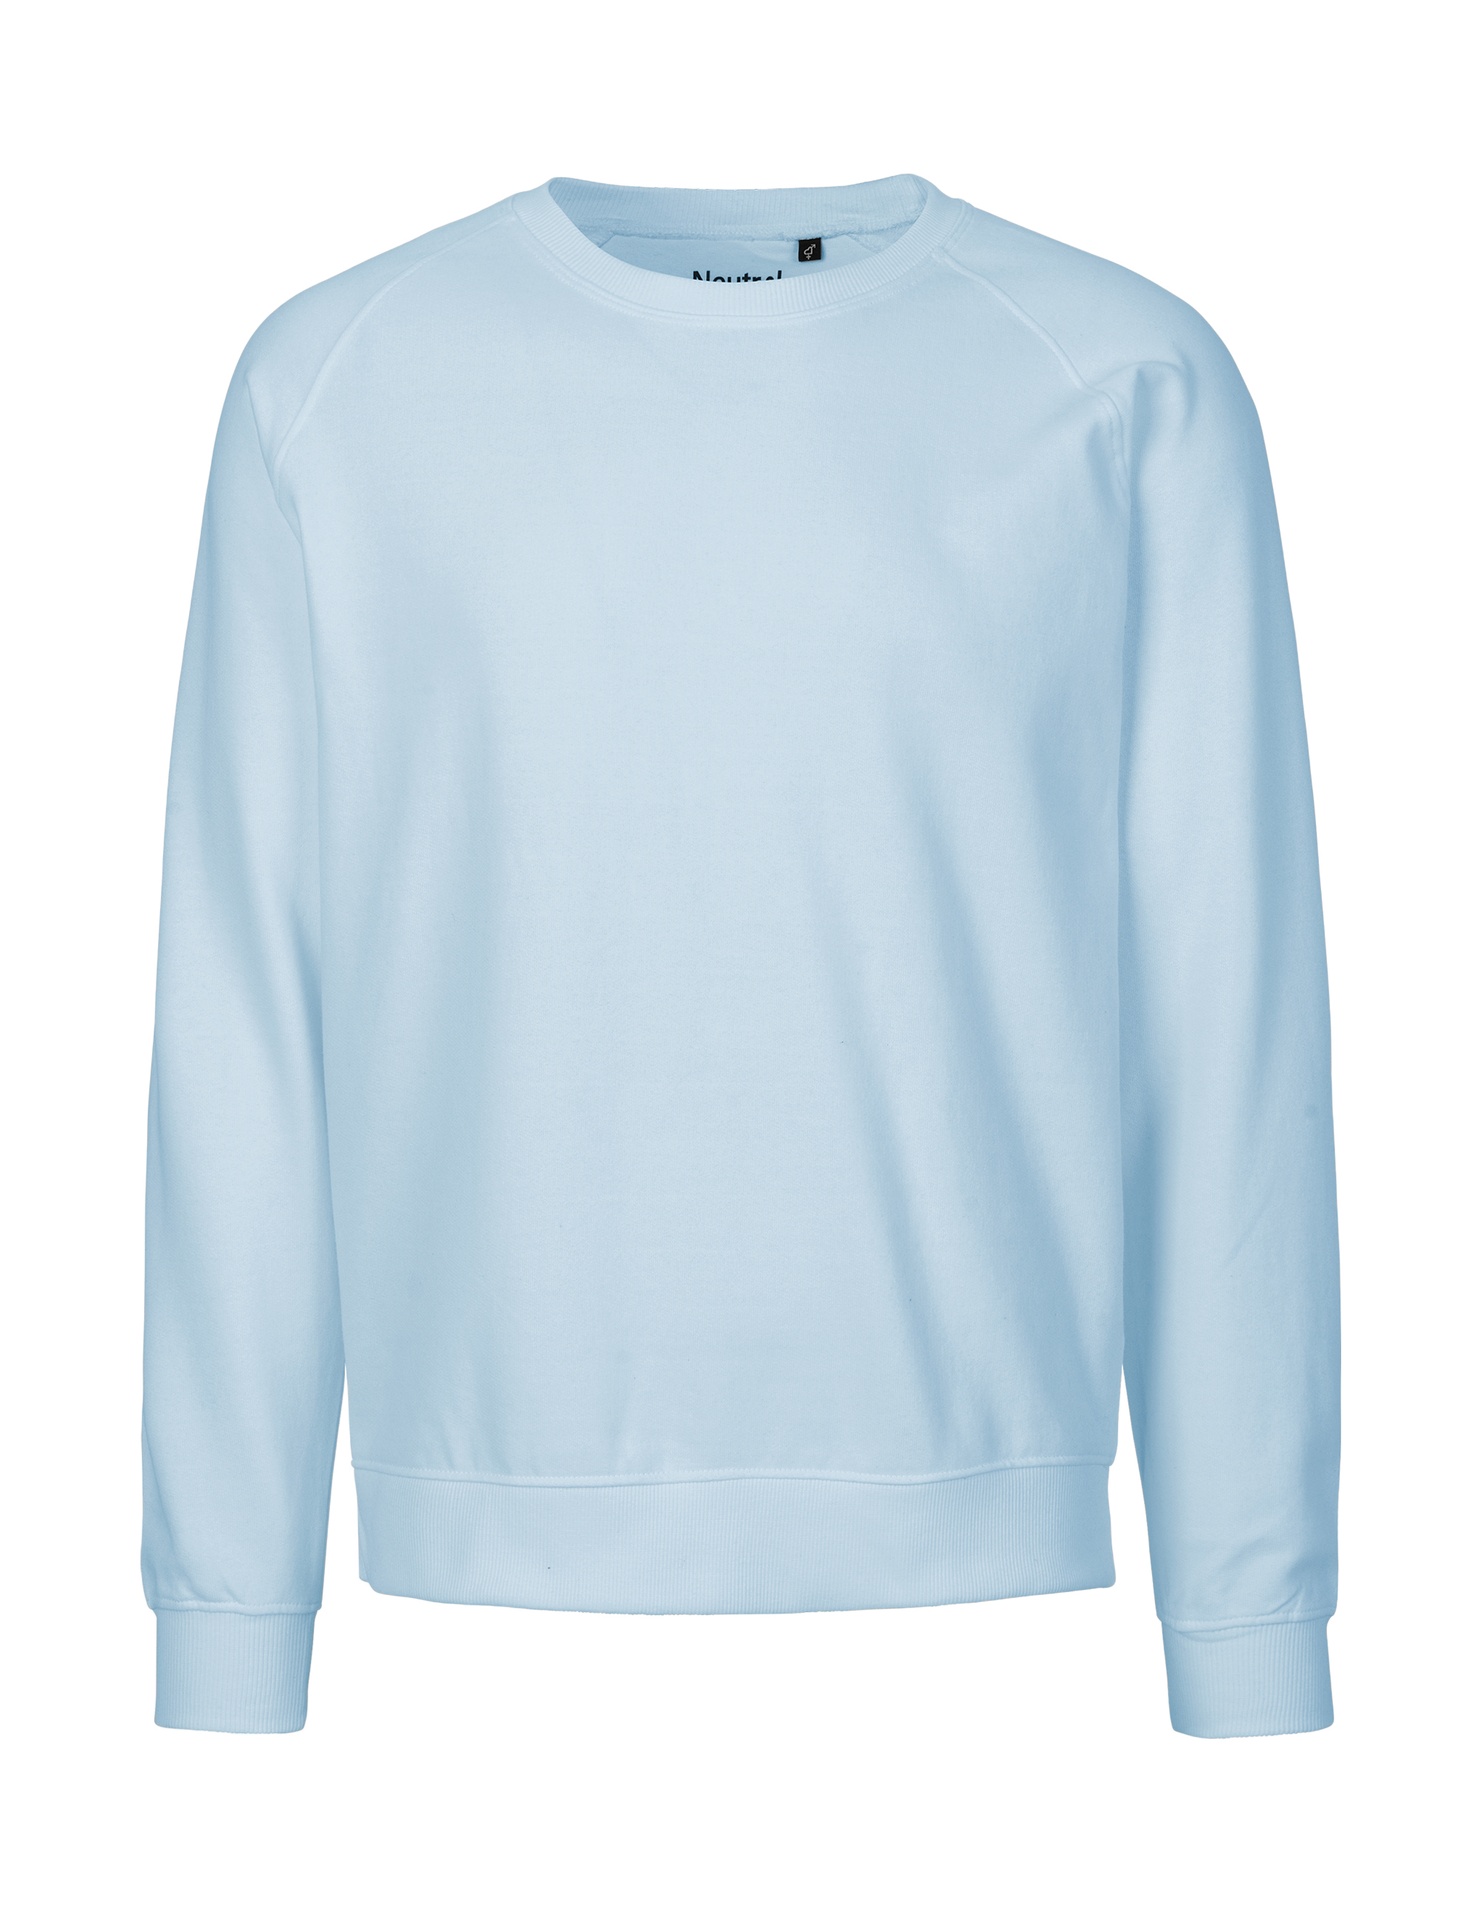 [PR/02888] Unisex Sweatshirt (Light Blue 69, M)